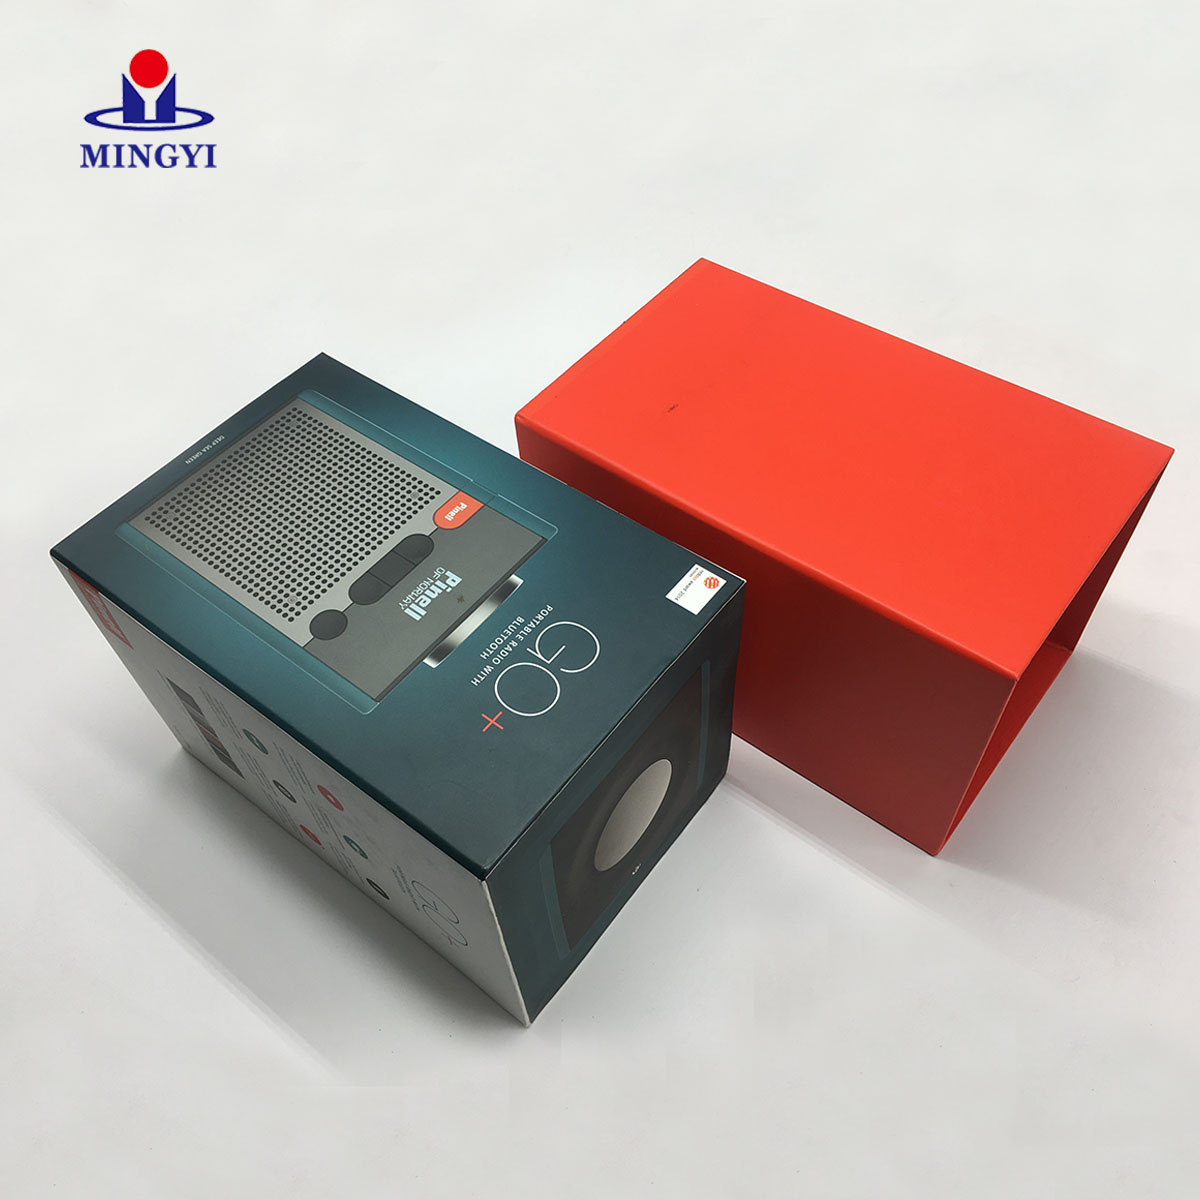 product-box customized-Mingyi Printing-img